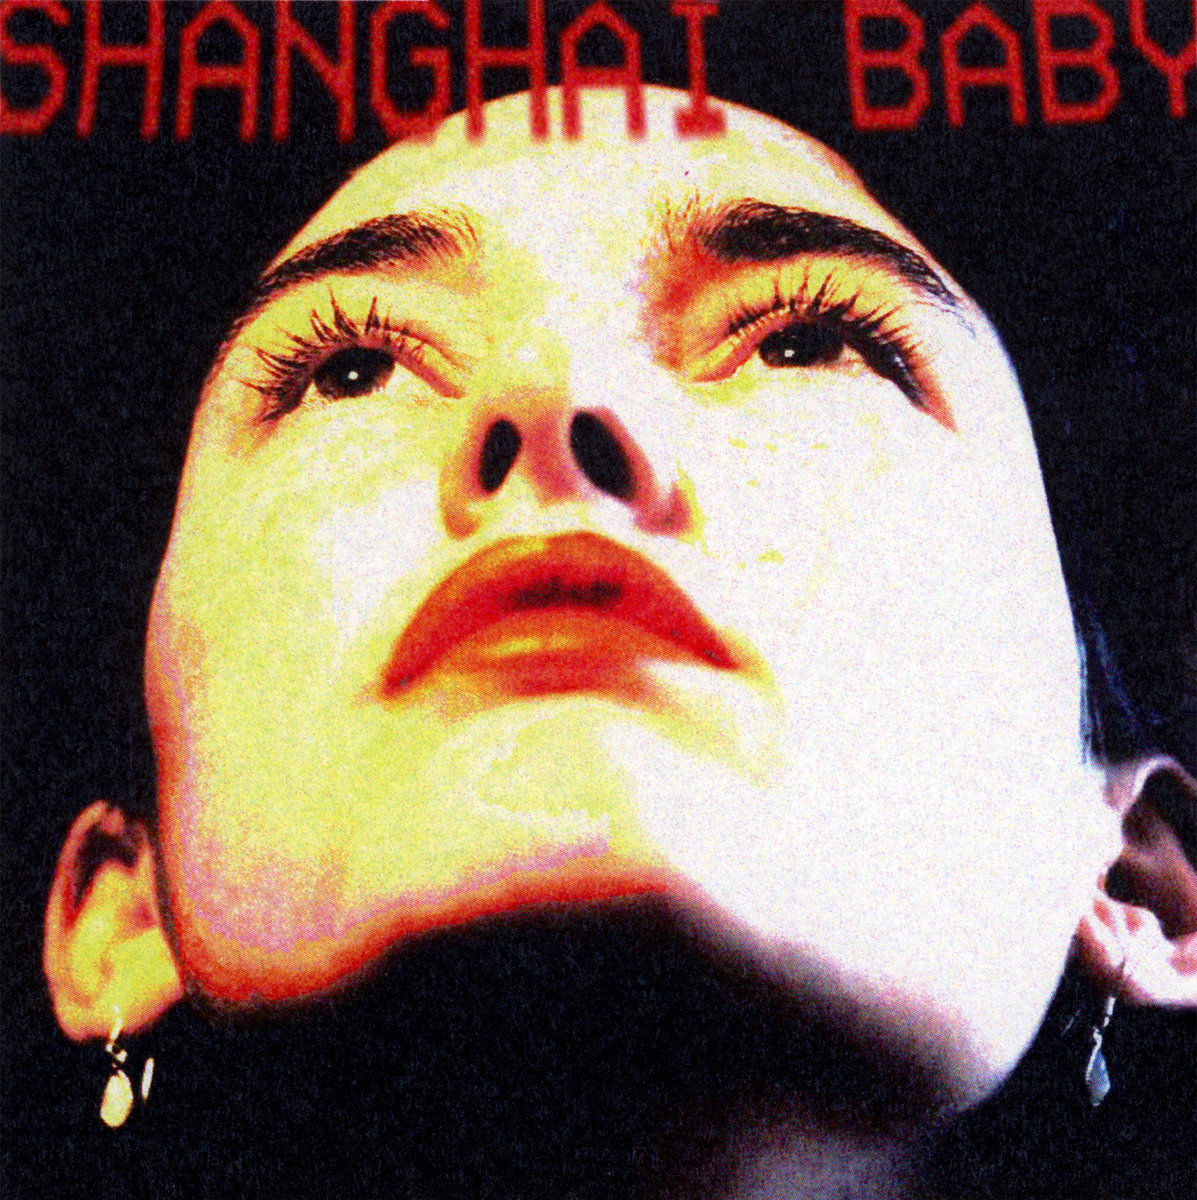 Shanghai Baby "EP01" LP